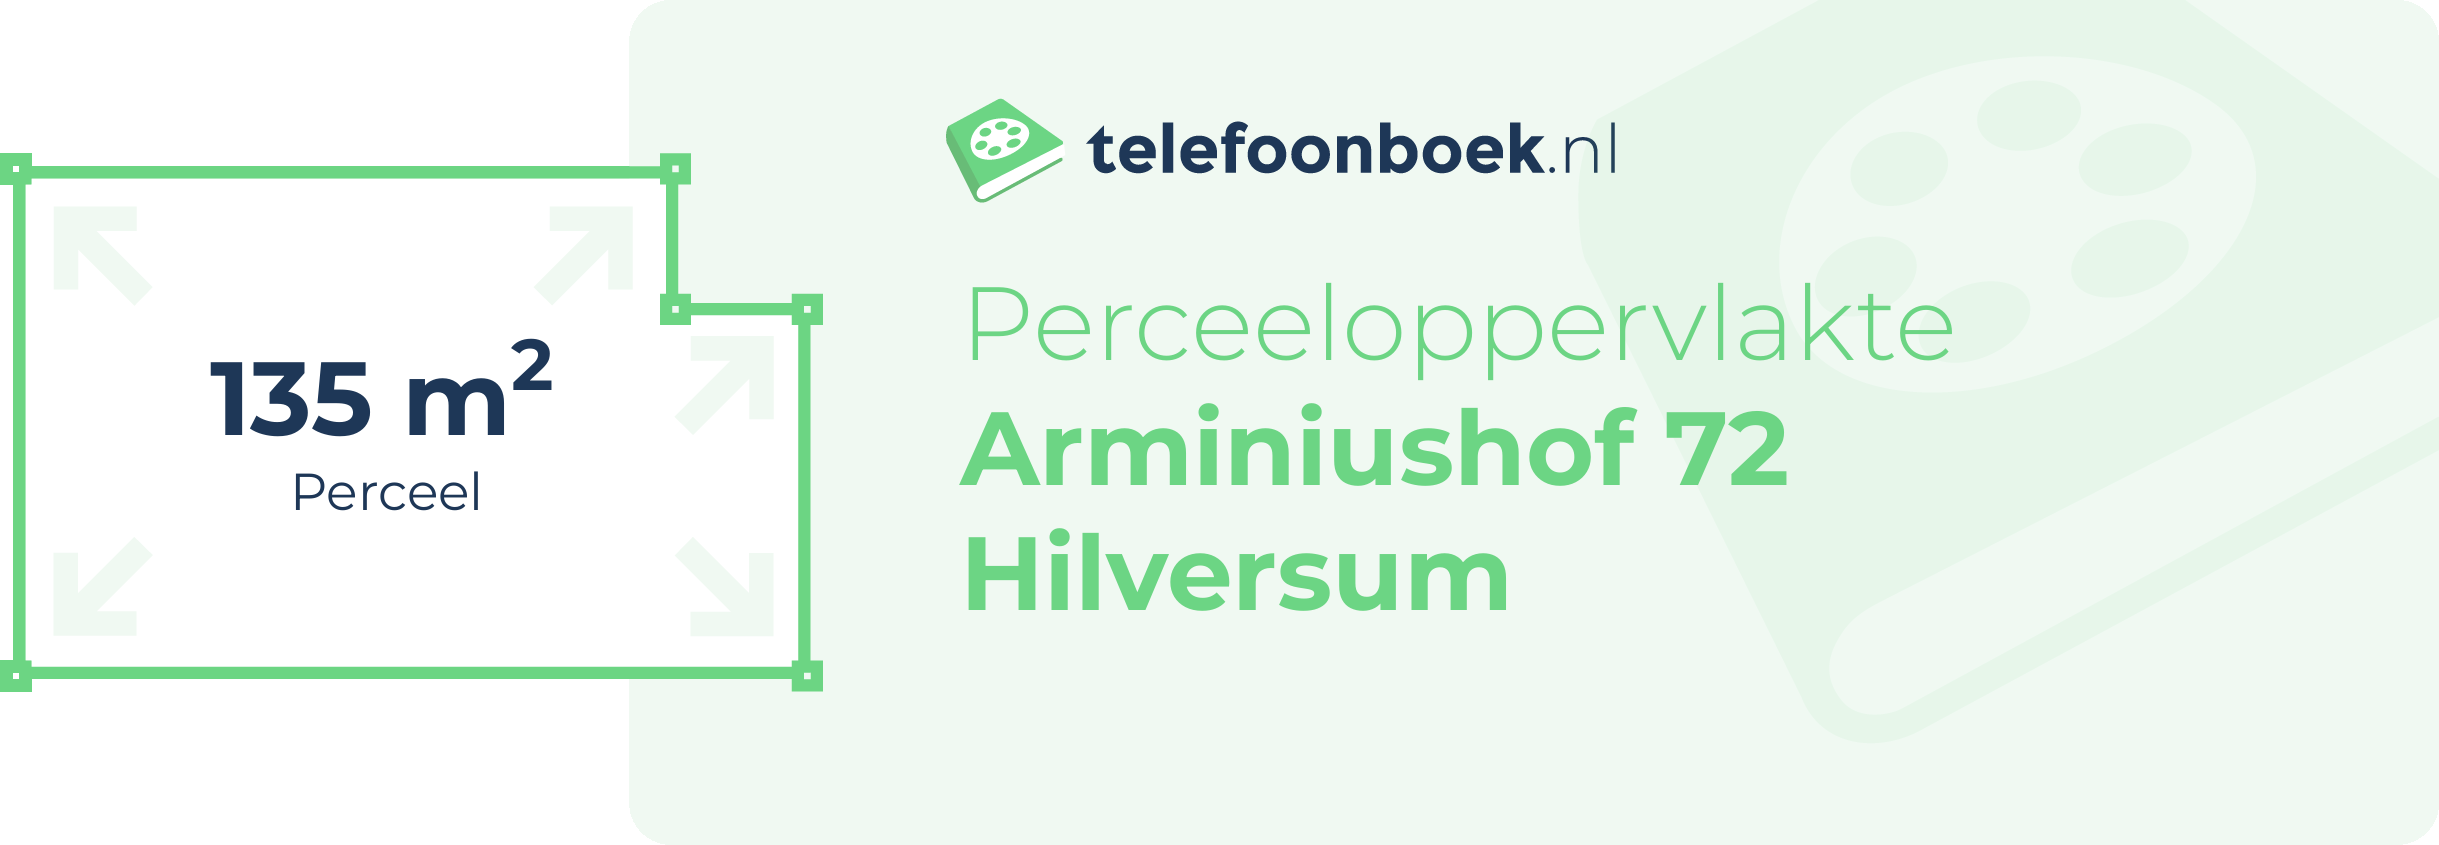 Perceeloppervlakte Arminiushof 72 Hilversum